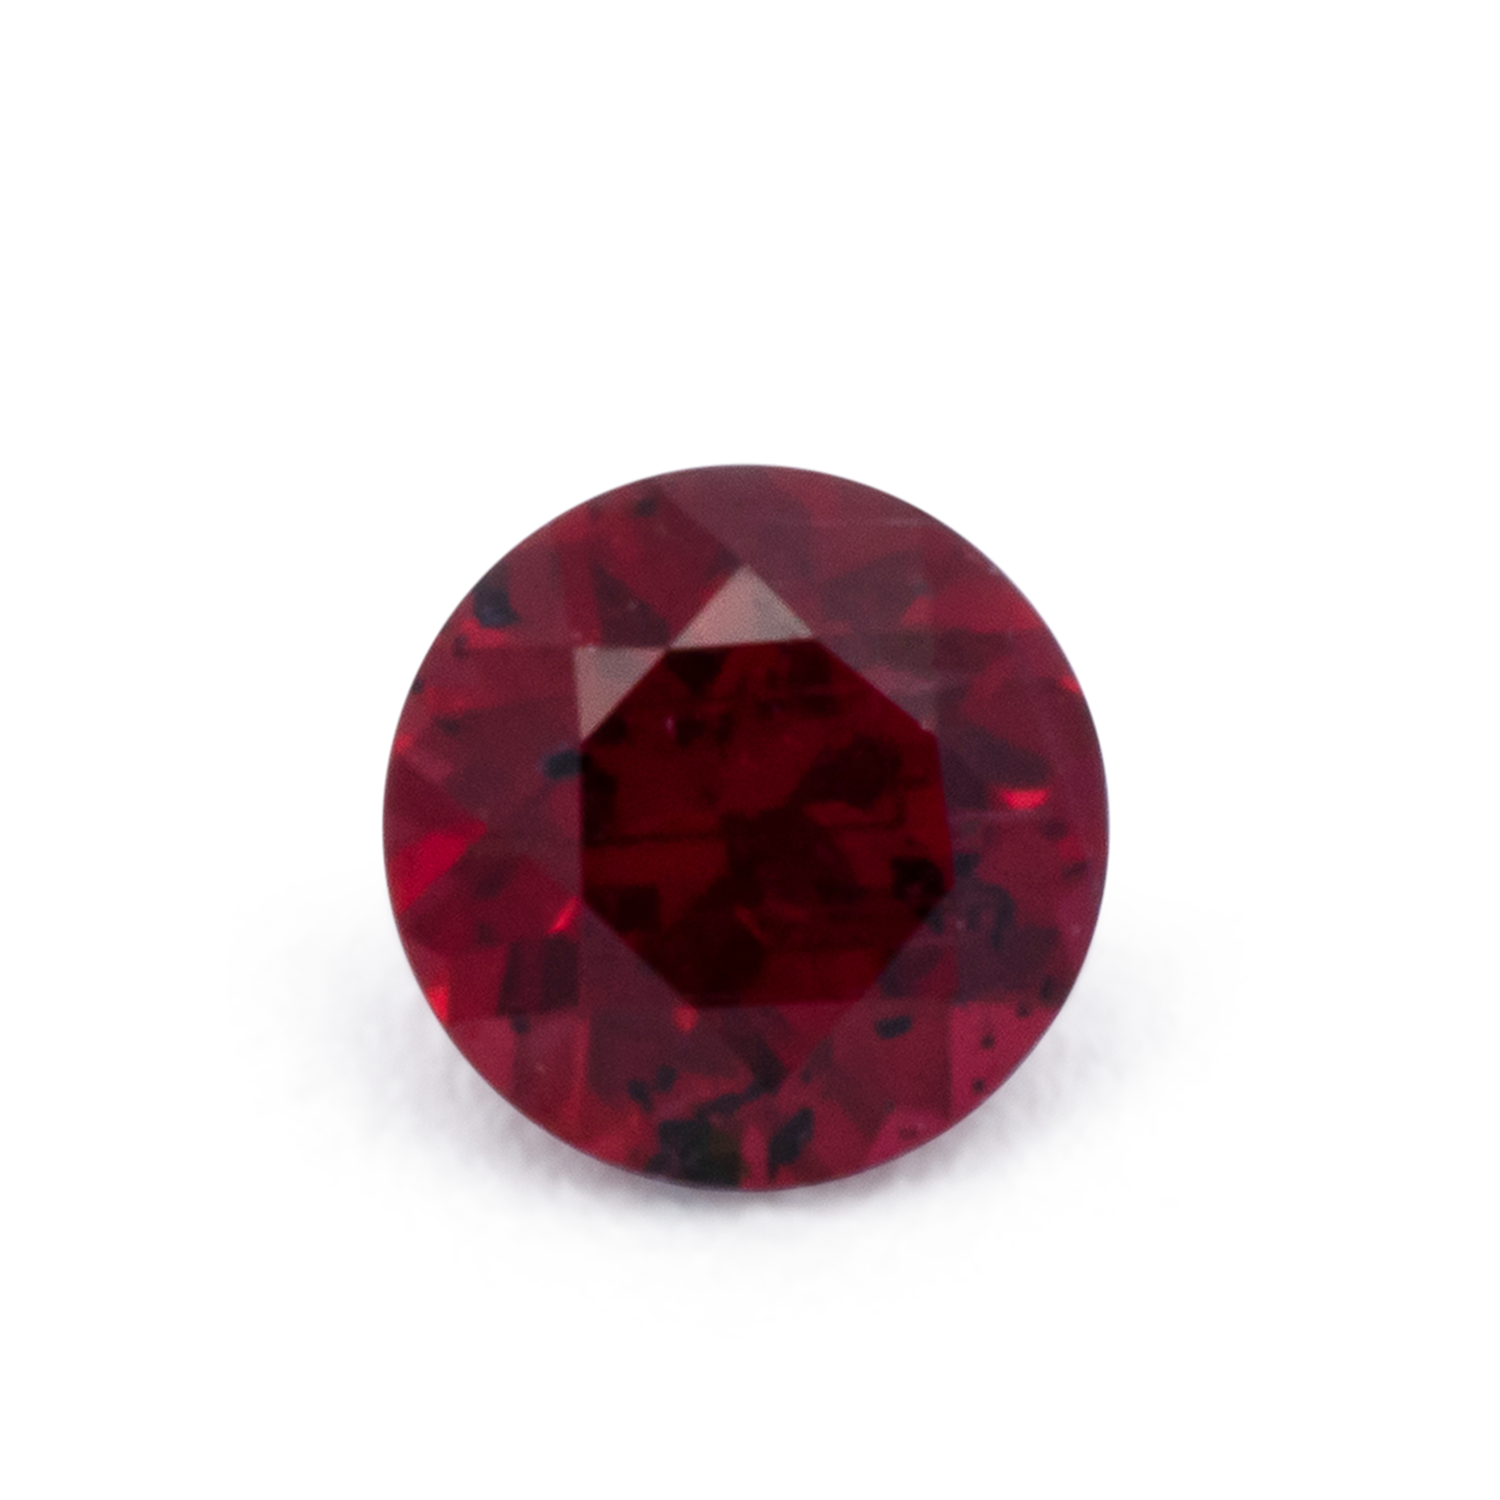 Rubin - rot, rund, 2.25x2.25 mm, 0.06 cts, Nr. RY10012